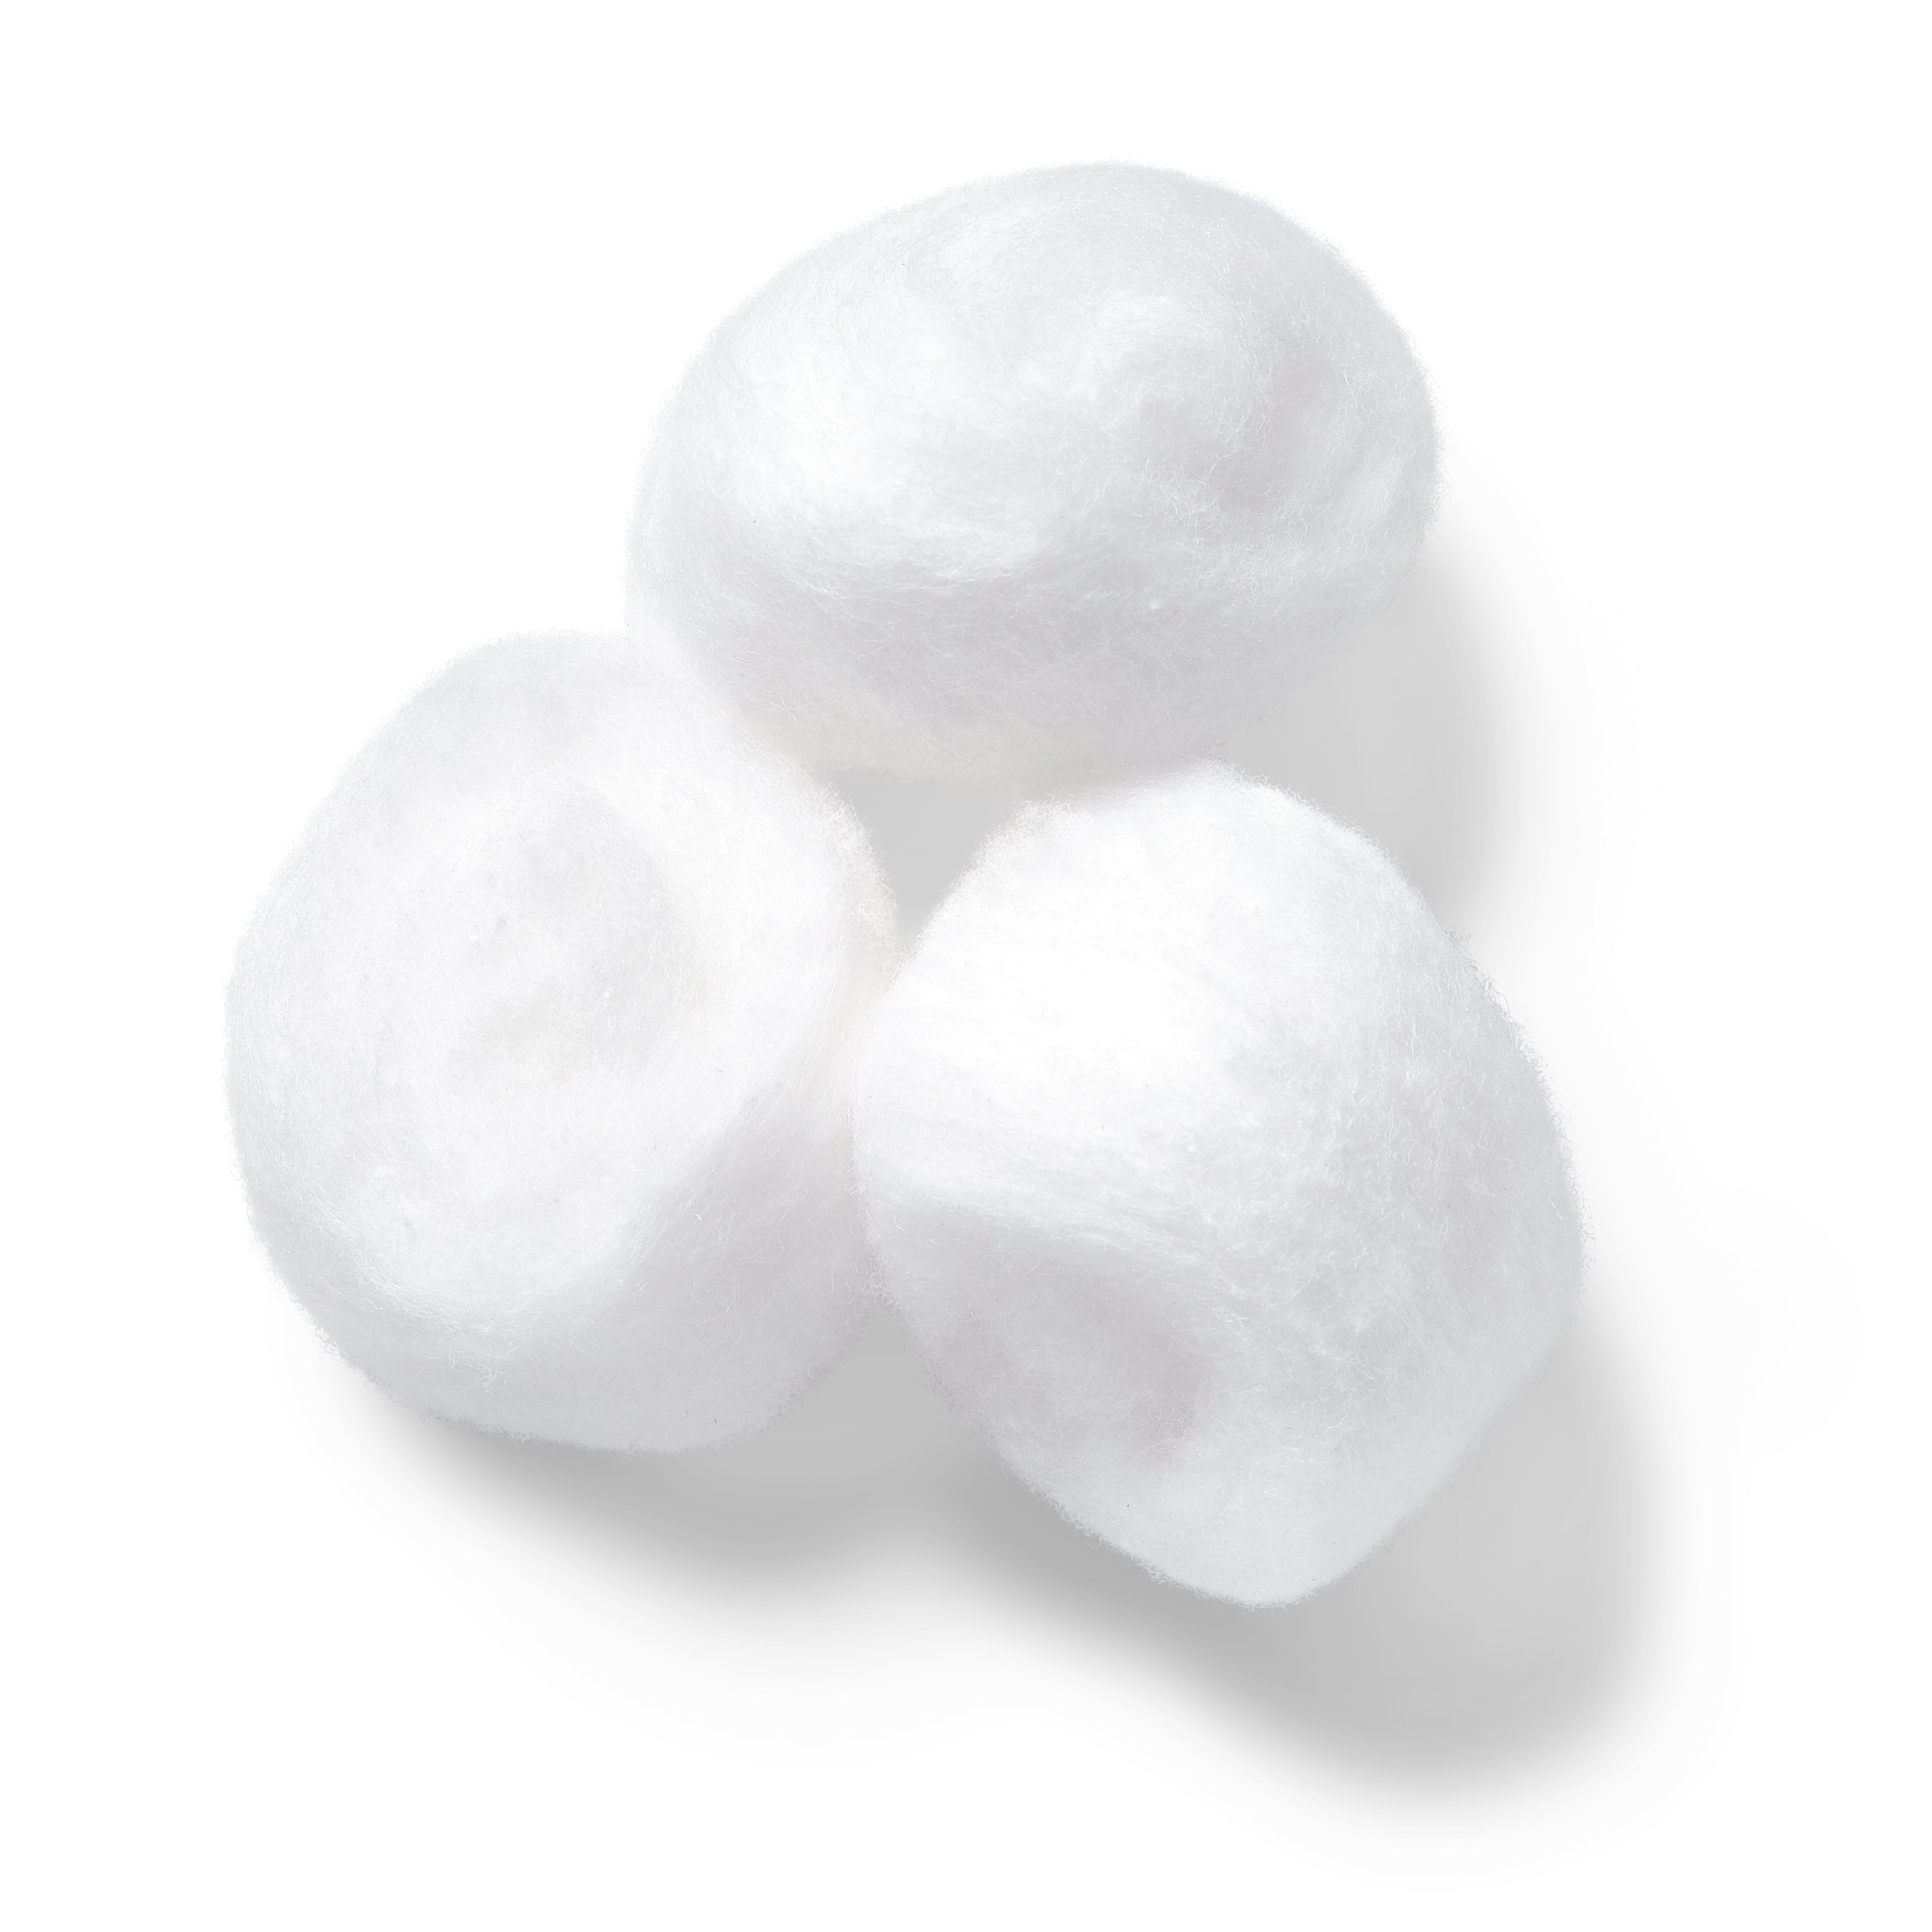 Good Sense Cotton Balls Jumbo 100% Pure Cotton, Lot Of 3 Bags, 100